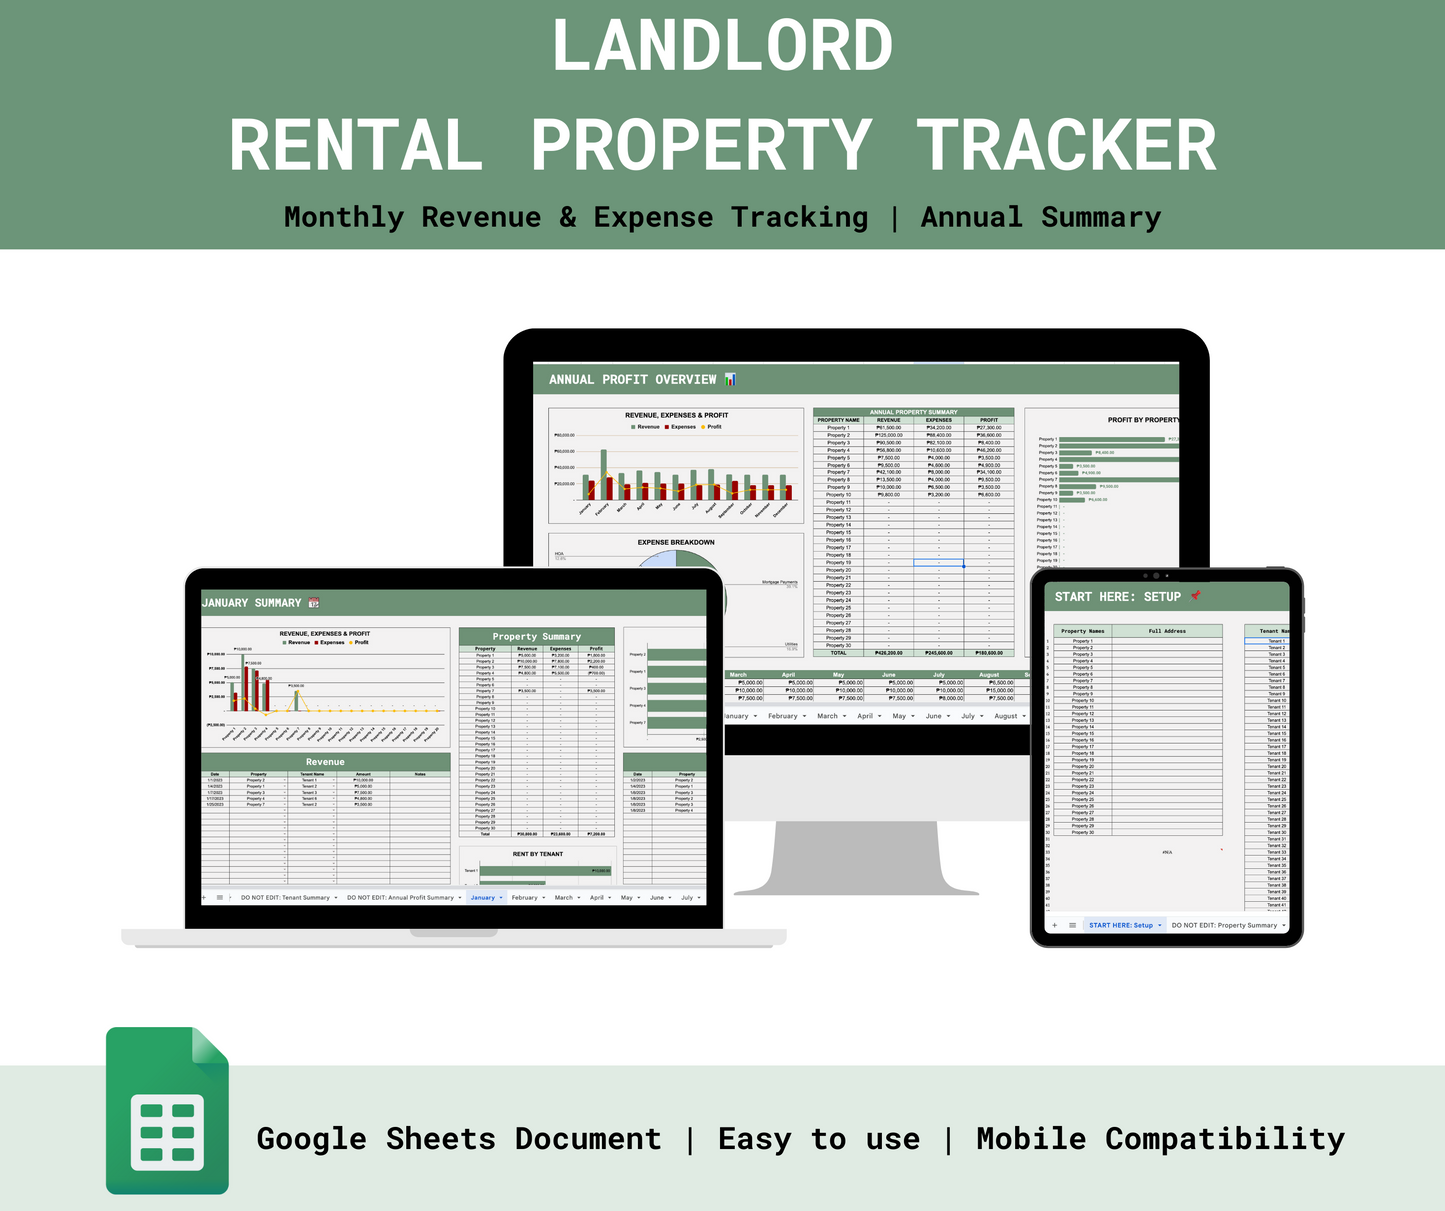 Landlord Rental Property Tracker